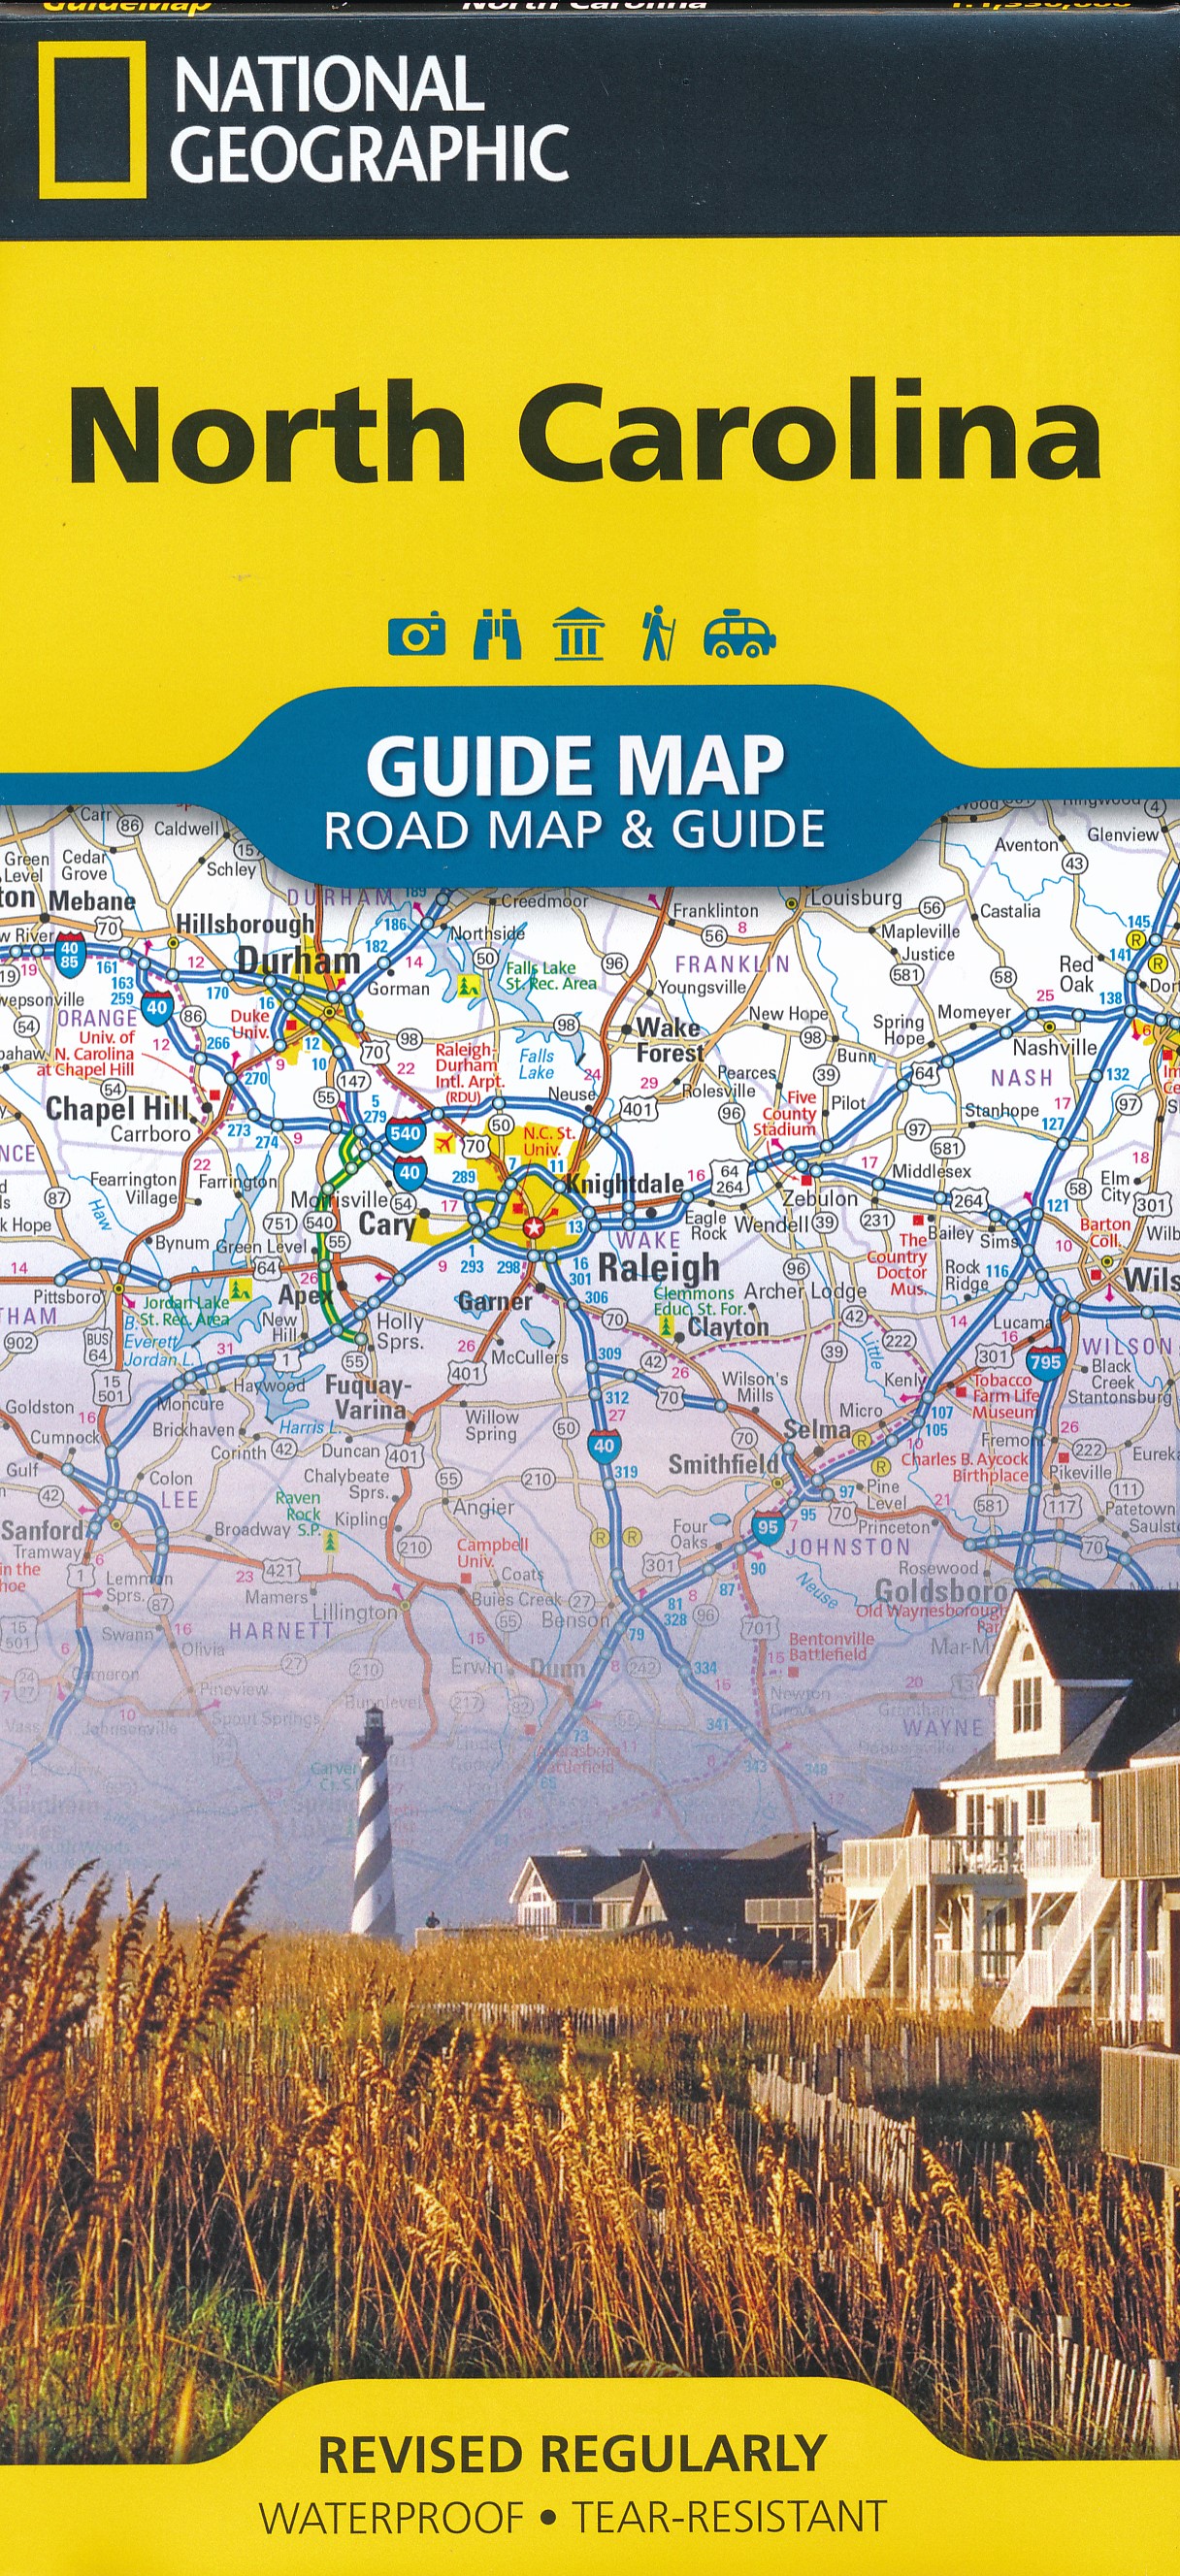 Online bestellen: Wegenkaart - landkaart Guide Map North Carolina | National Geographic